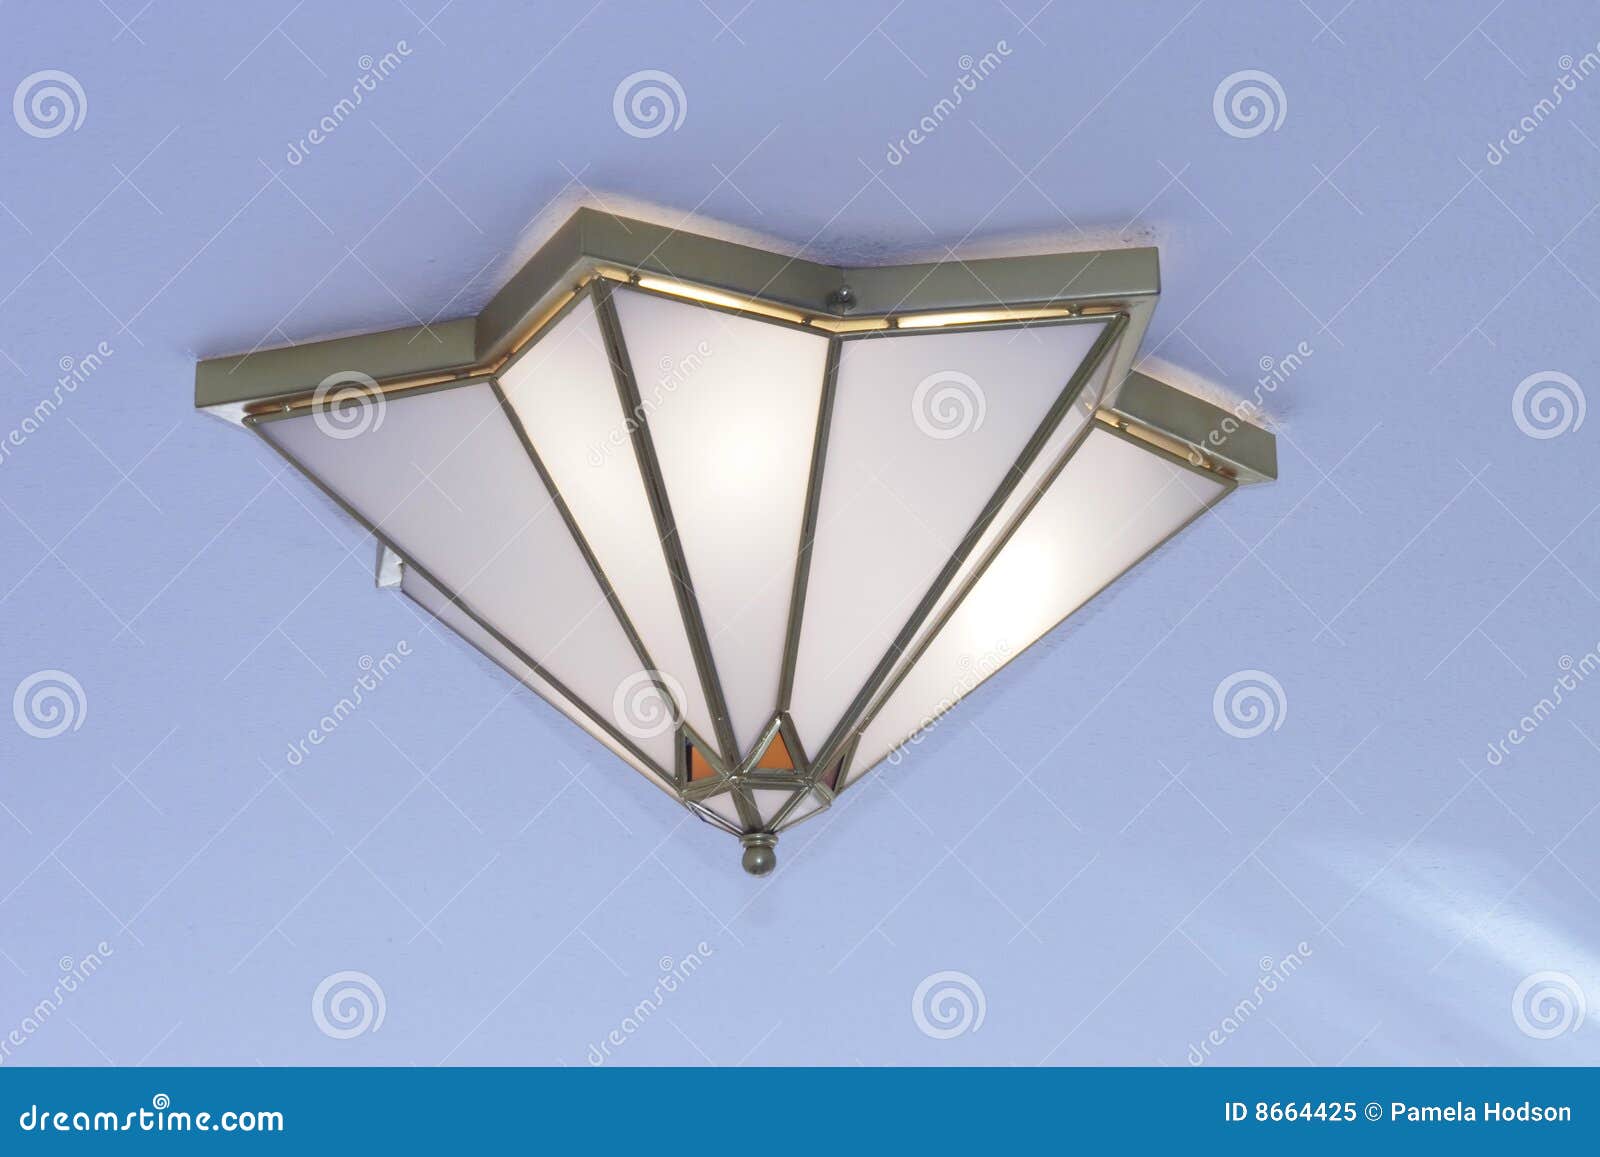 Ceiling Light Stock Image Image Of Metal Light Bright 8664425